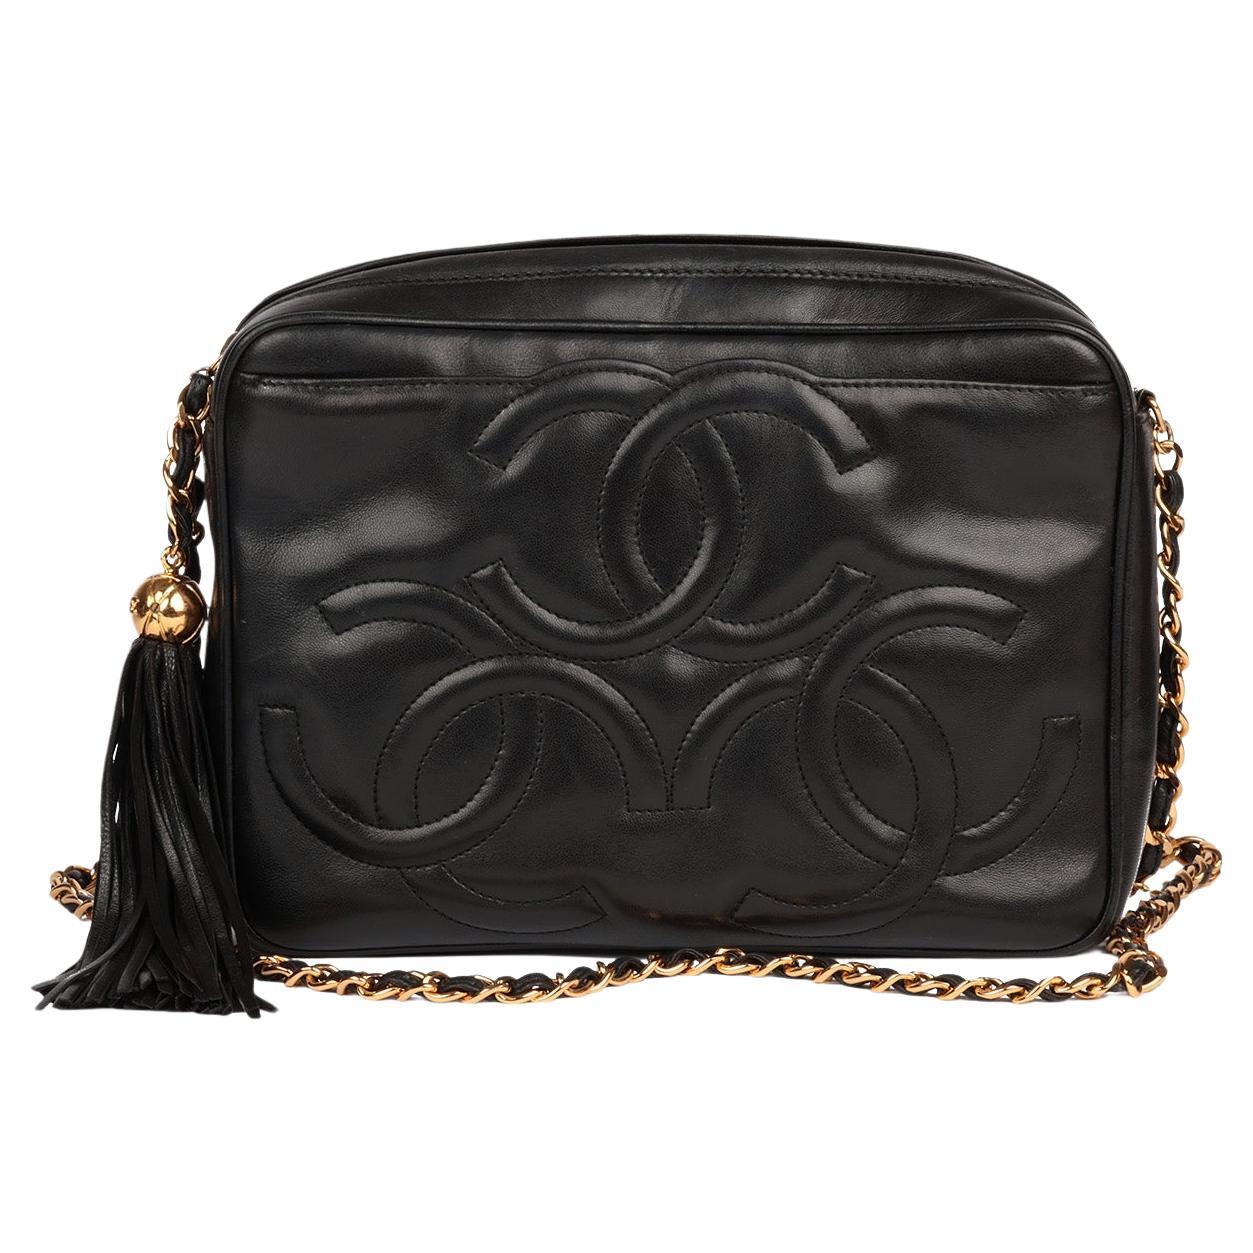 Chanel Black Smooth Lambskin Leather Vintage Small Fringe Timeless Camera Bag For Sale